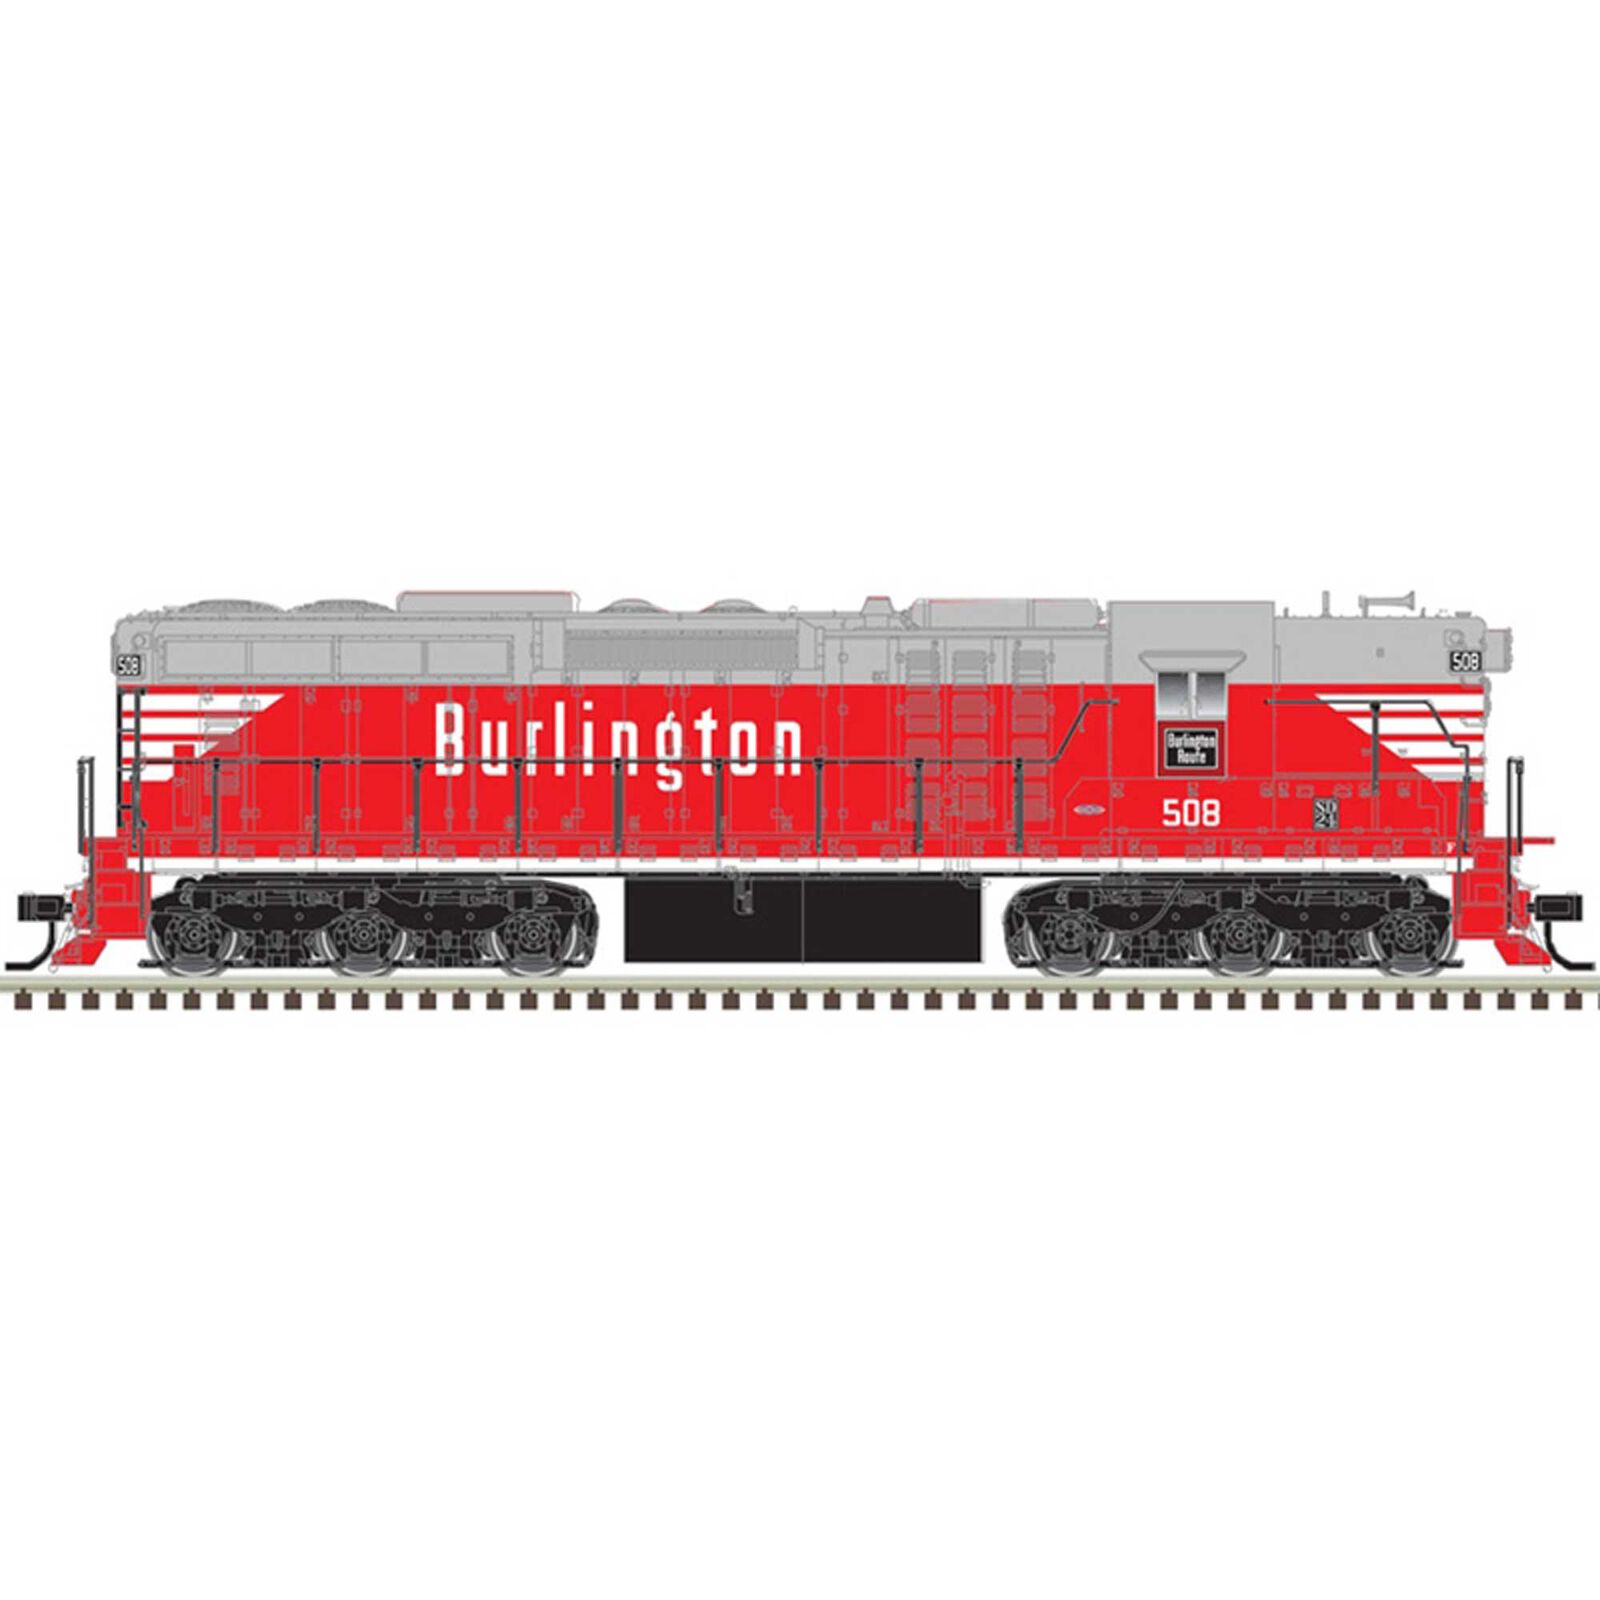 Burlington 508 (Red Gray White)